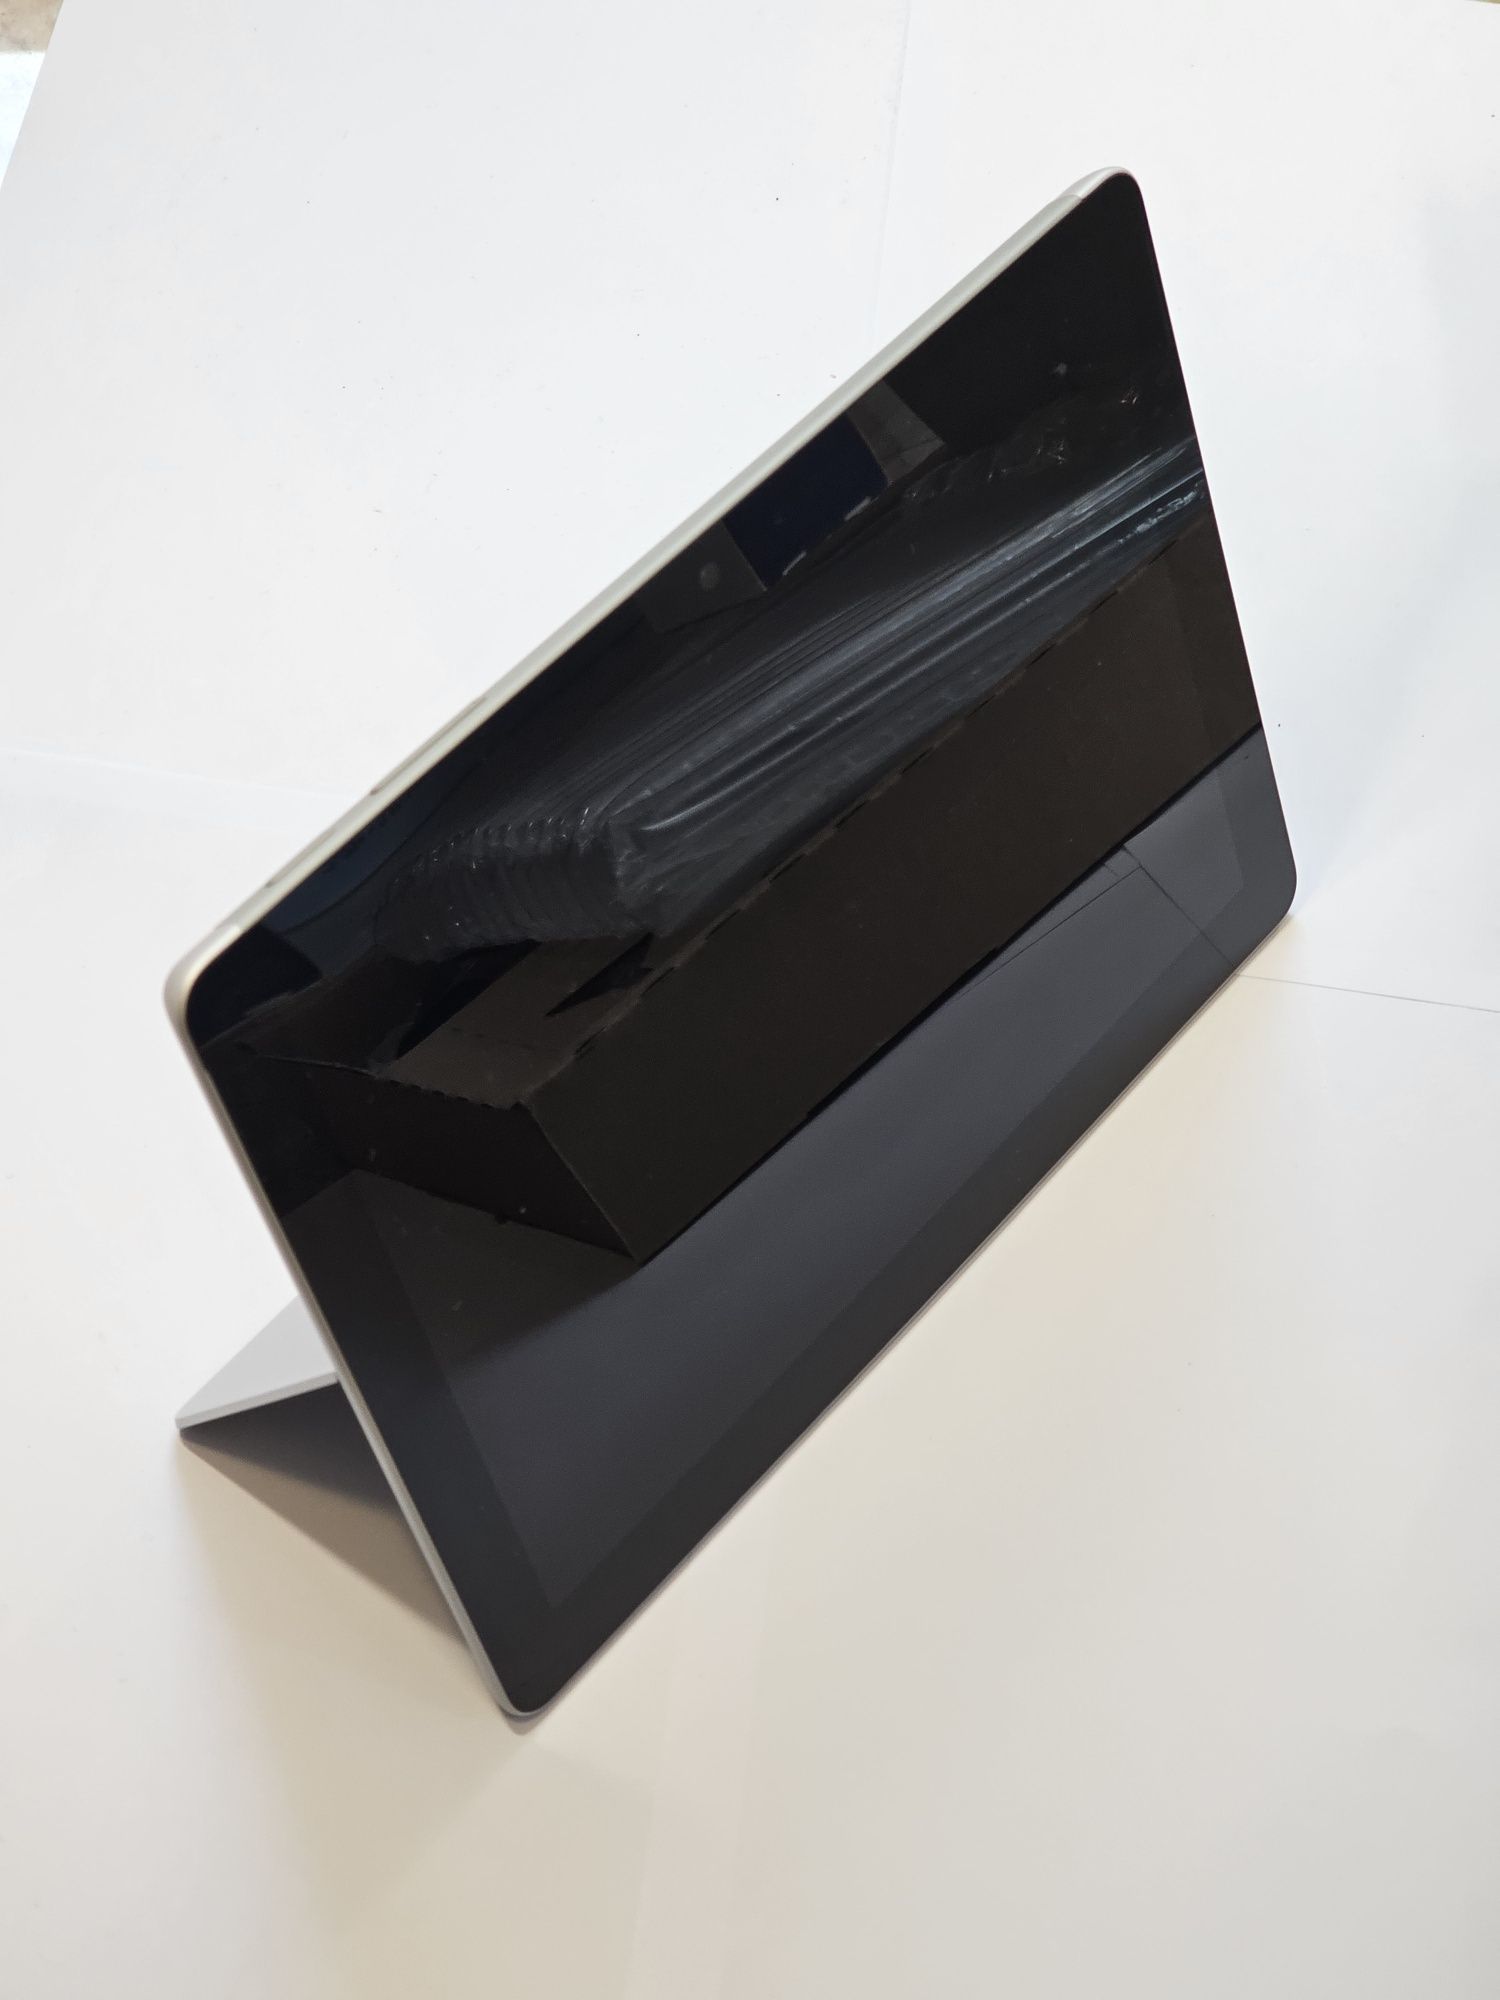 Microsoft Surface Go Intel Pentium Gold - (10", 8Go RAM 128Go SSD